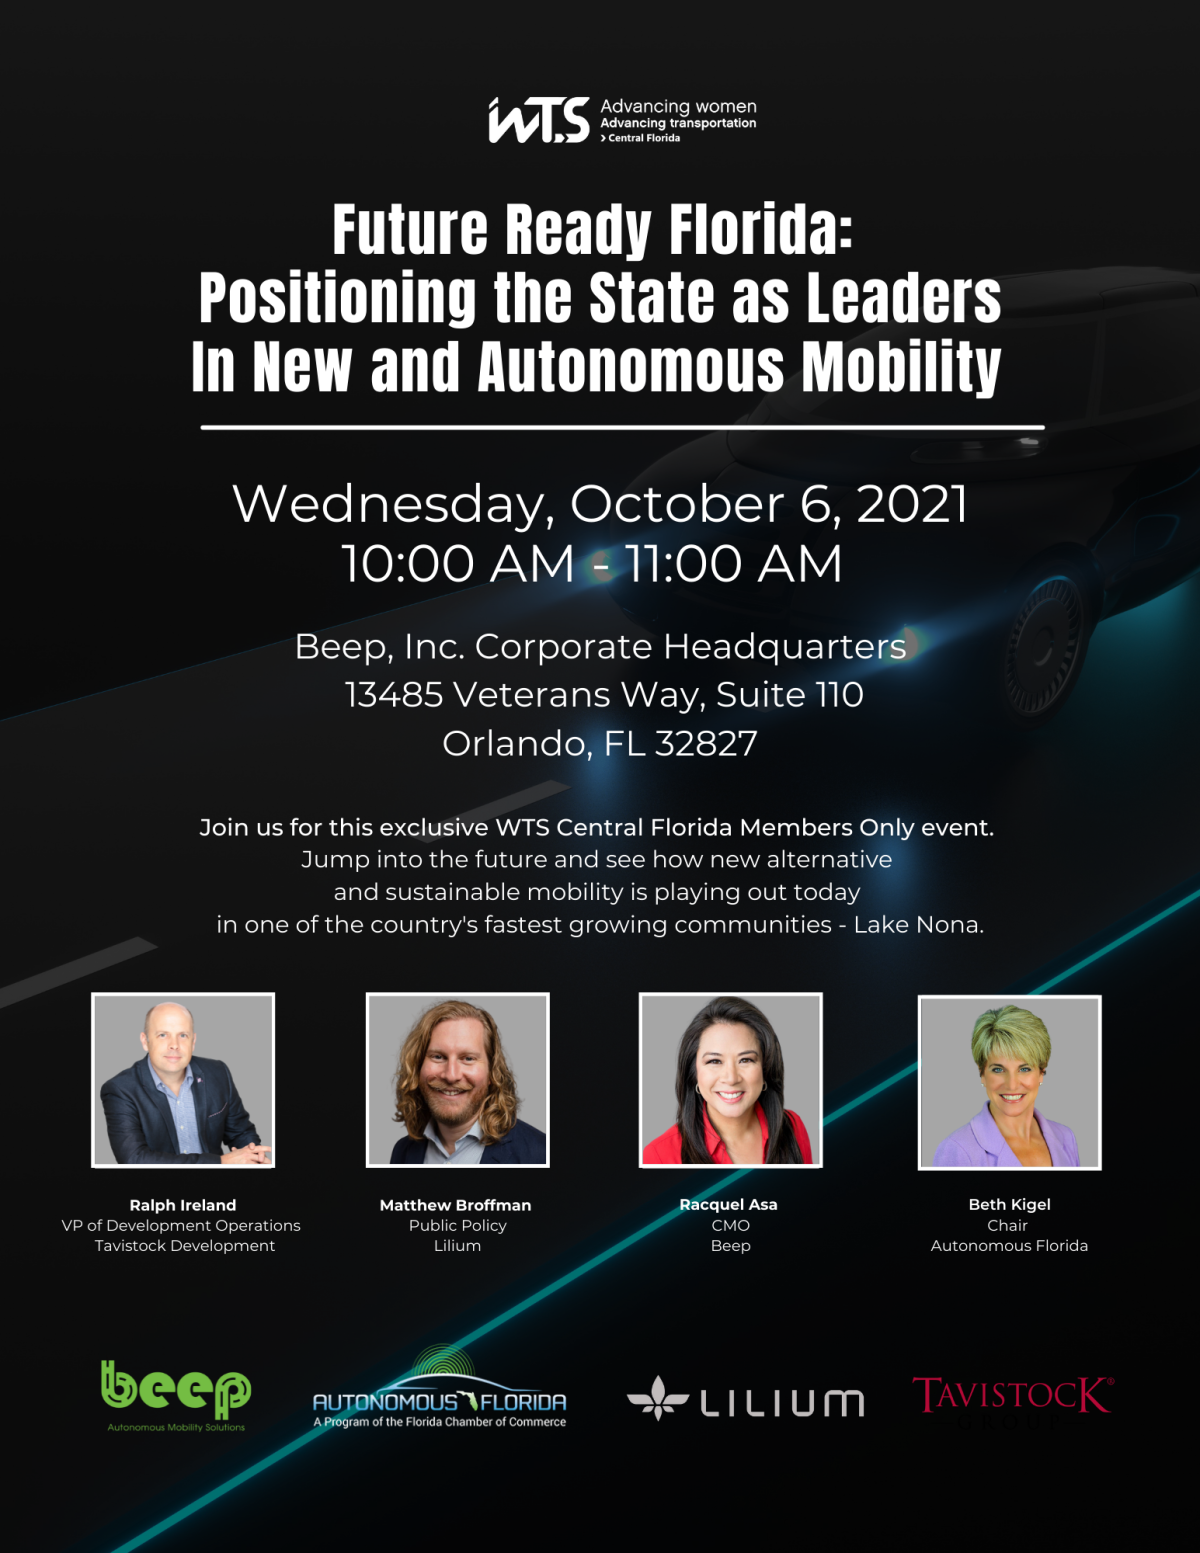 Future Ready Florida speakers